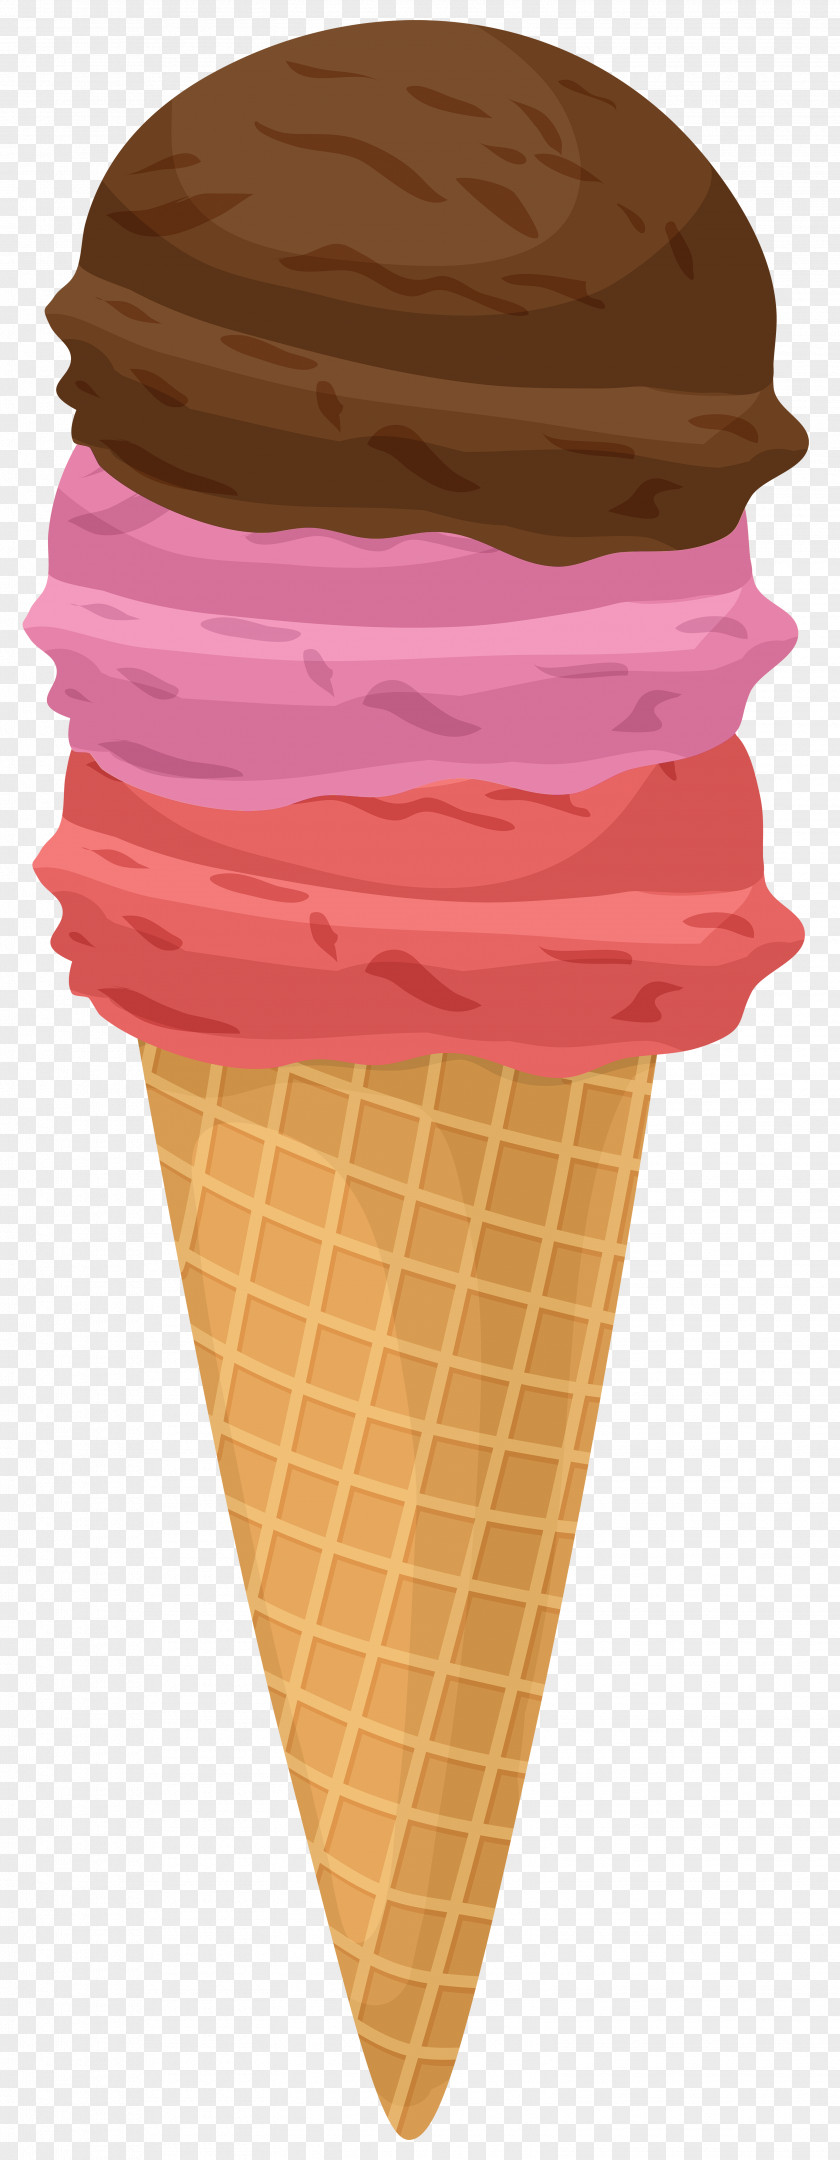 Ice Cream Cones Strawberry Neapolitan PNG